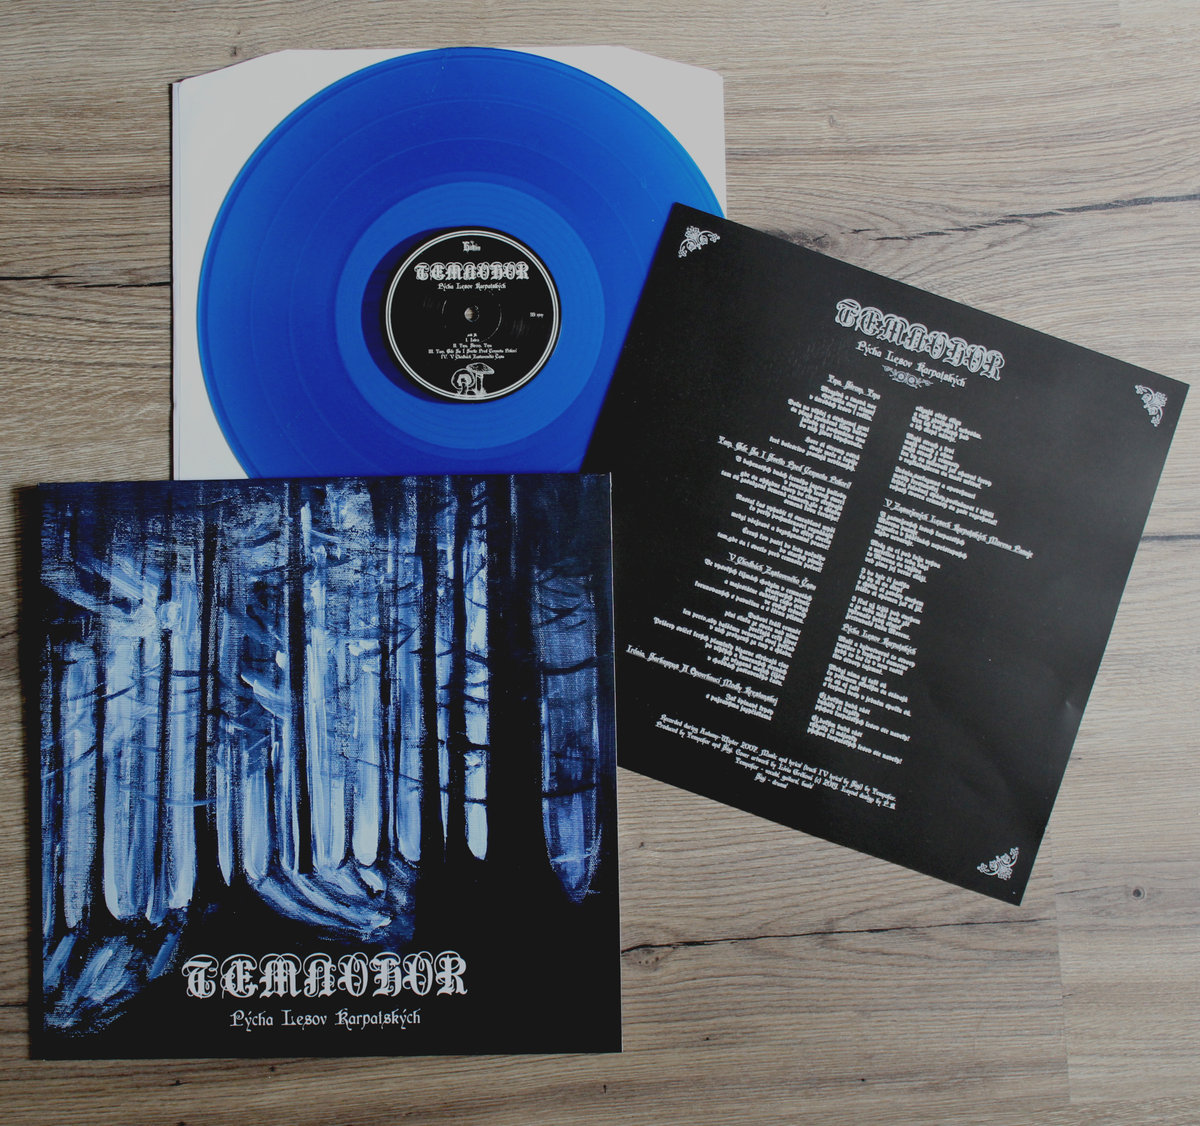 TEMNOHOR - Pcha lesov karpatskch  (Blue vinyl)